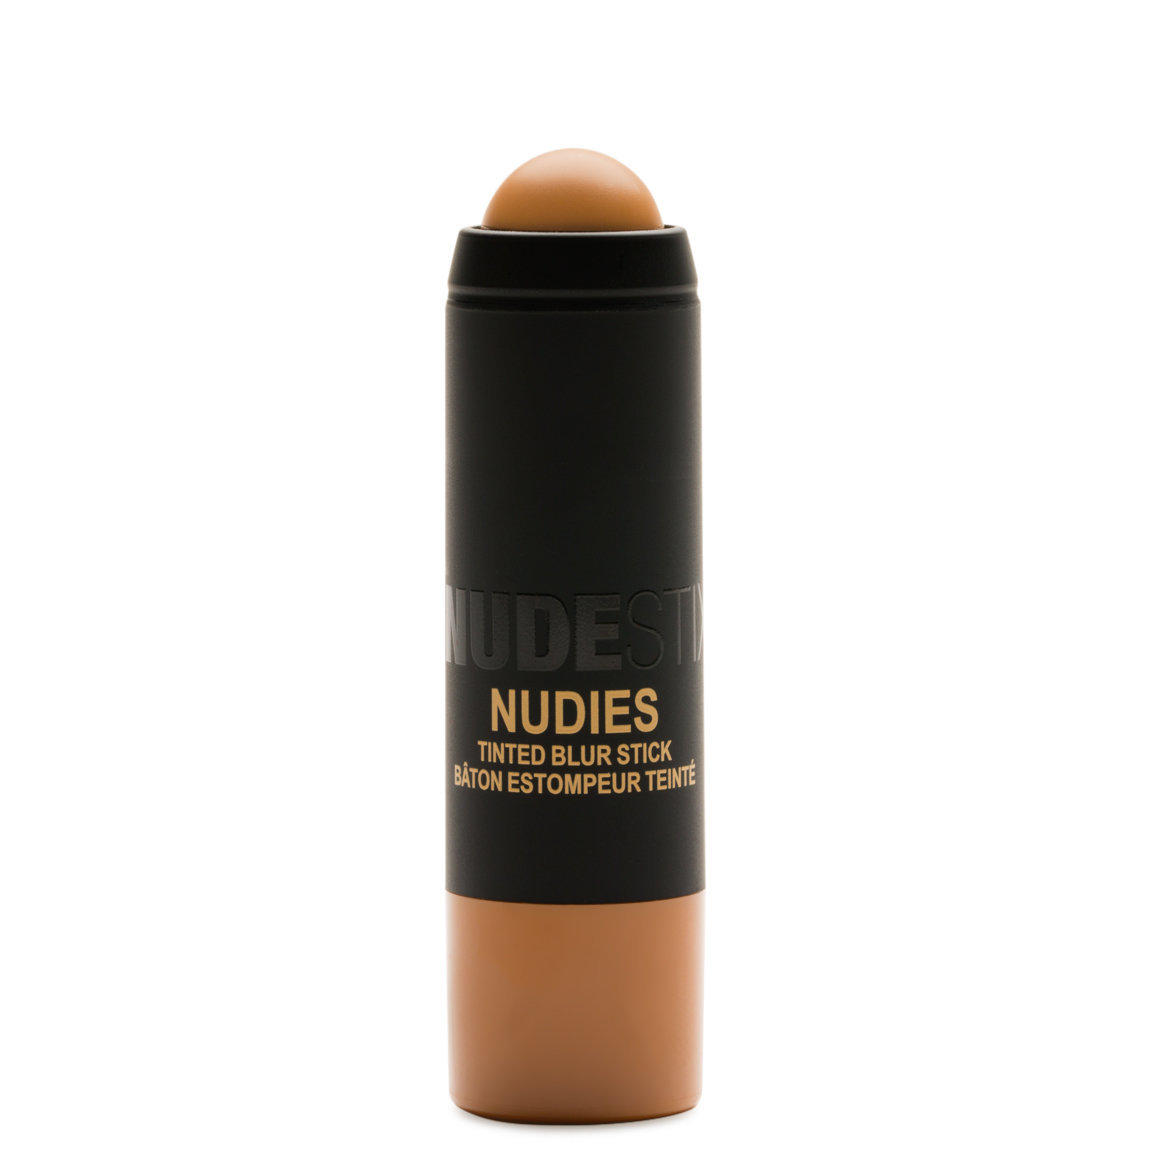 NudeStix Nudies Tinted Blur Stick Medium 6